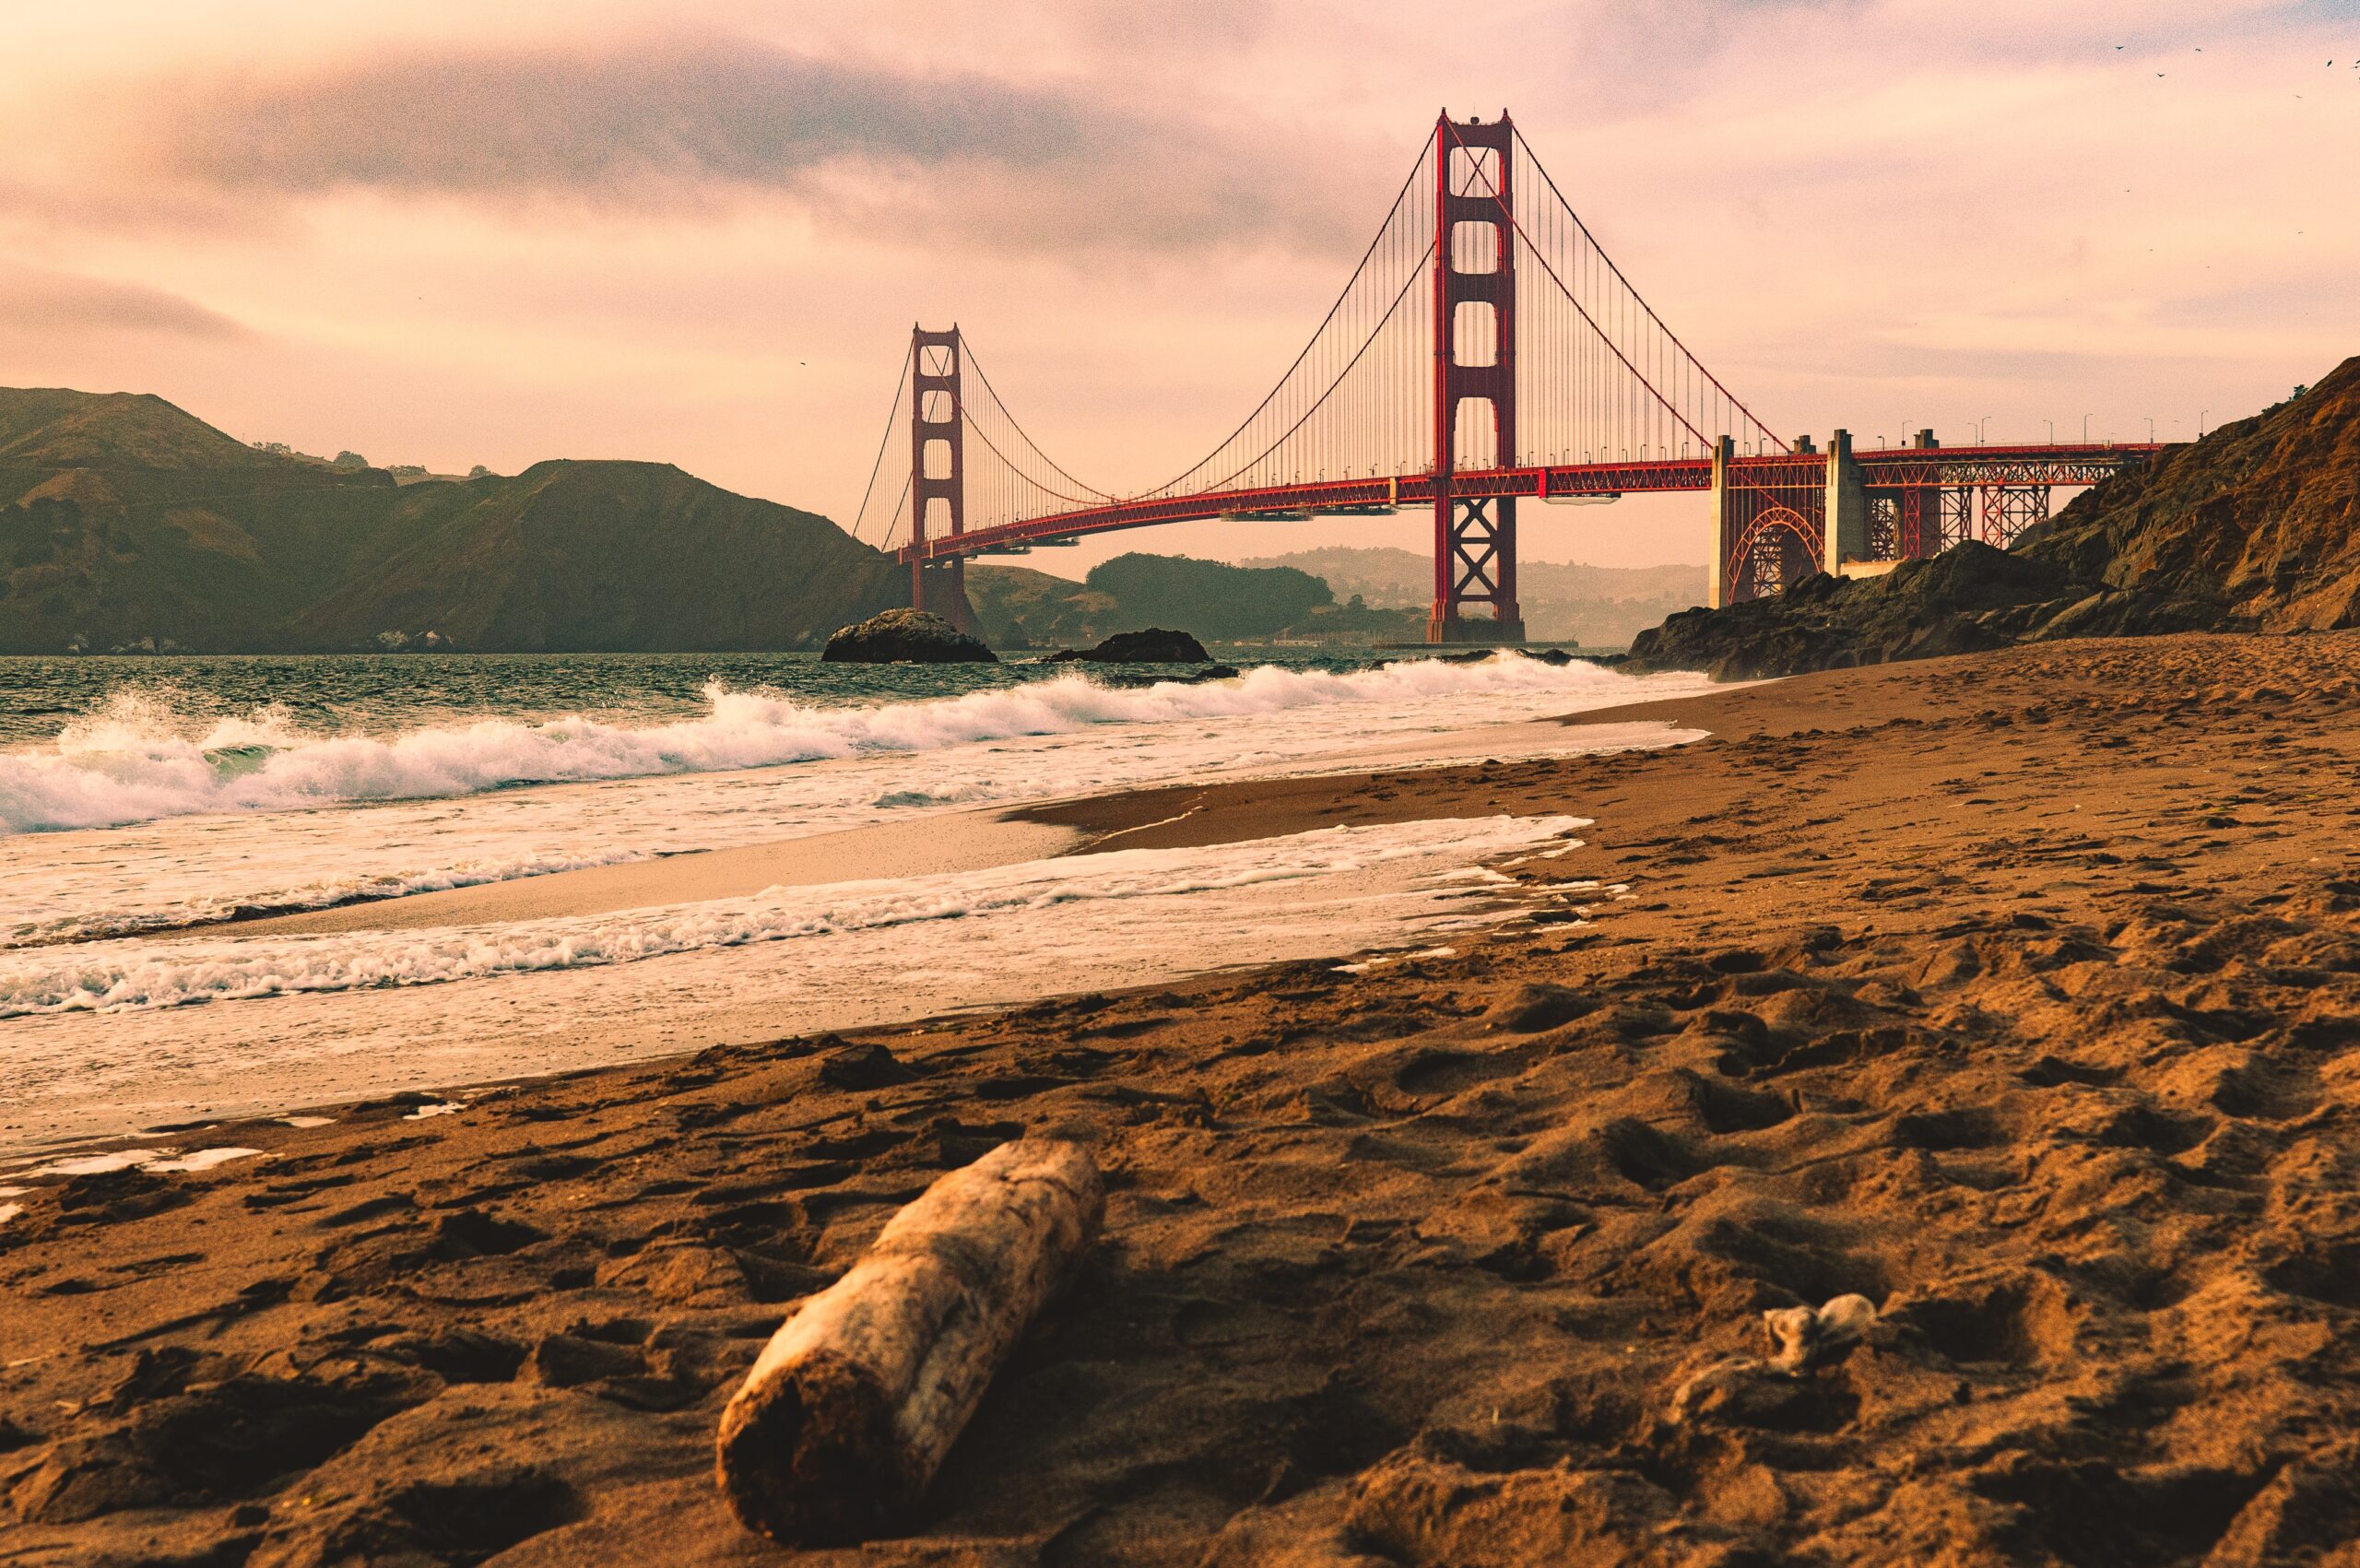 Sunset view of the Golden Gate Bridge from Baker Beach, San Francisco